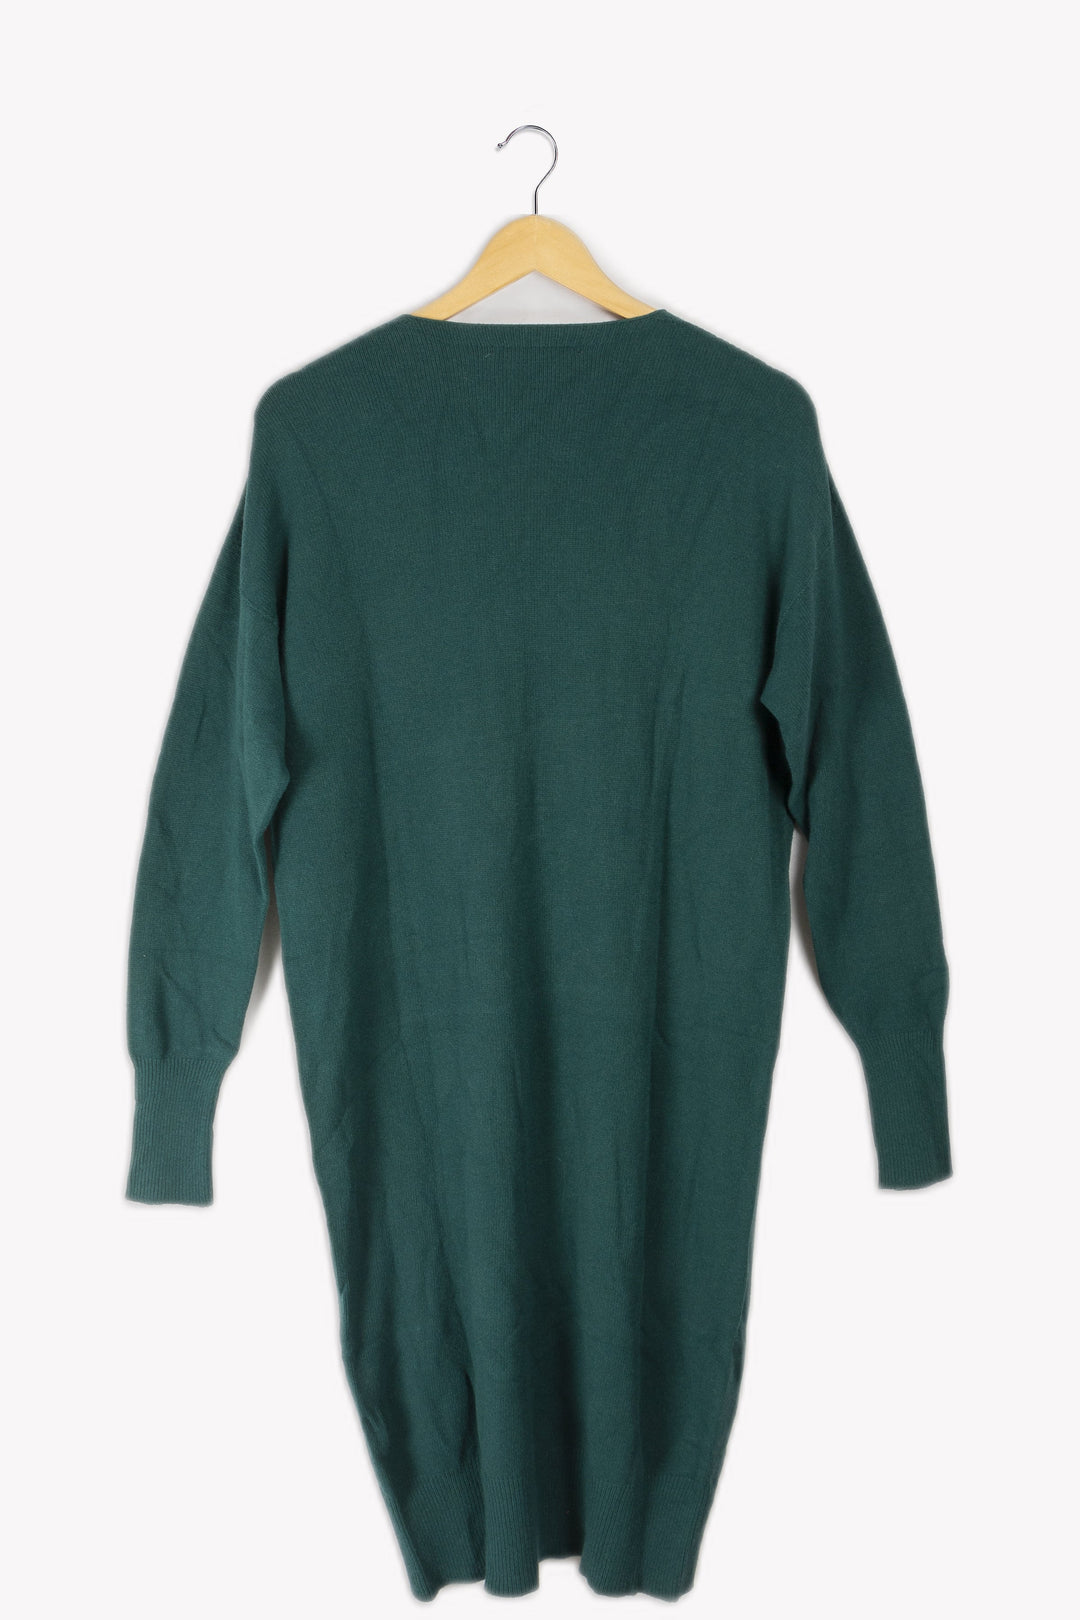 Grünes Pulloverkleid - M